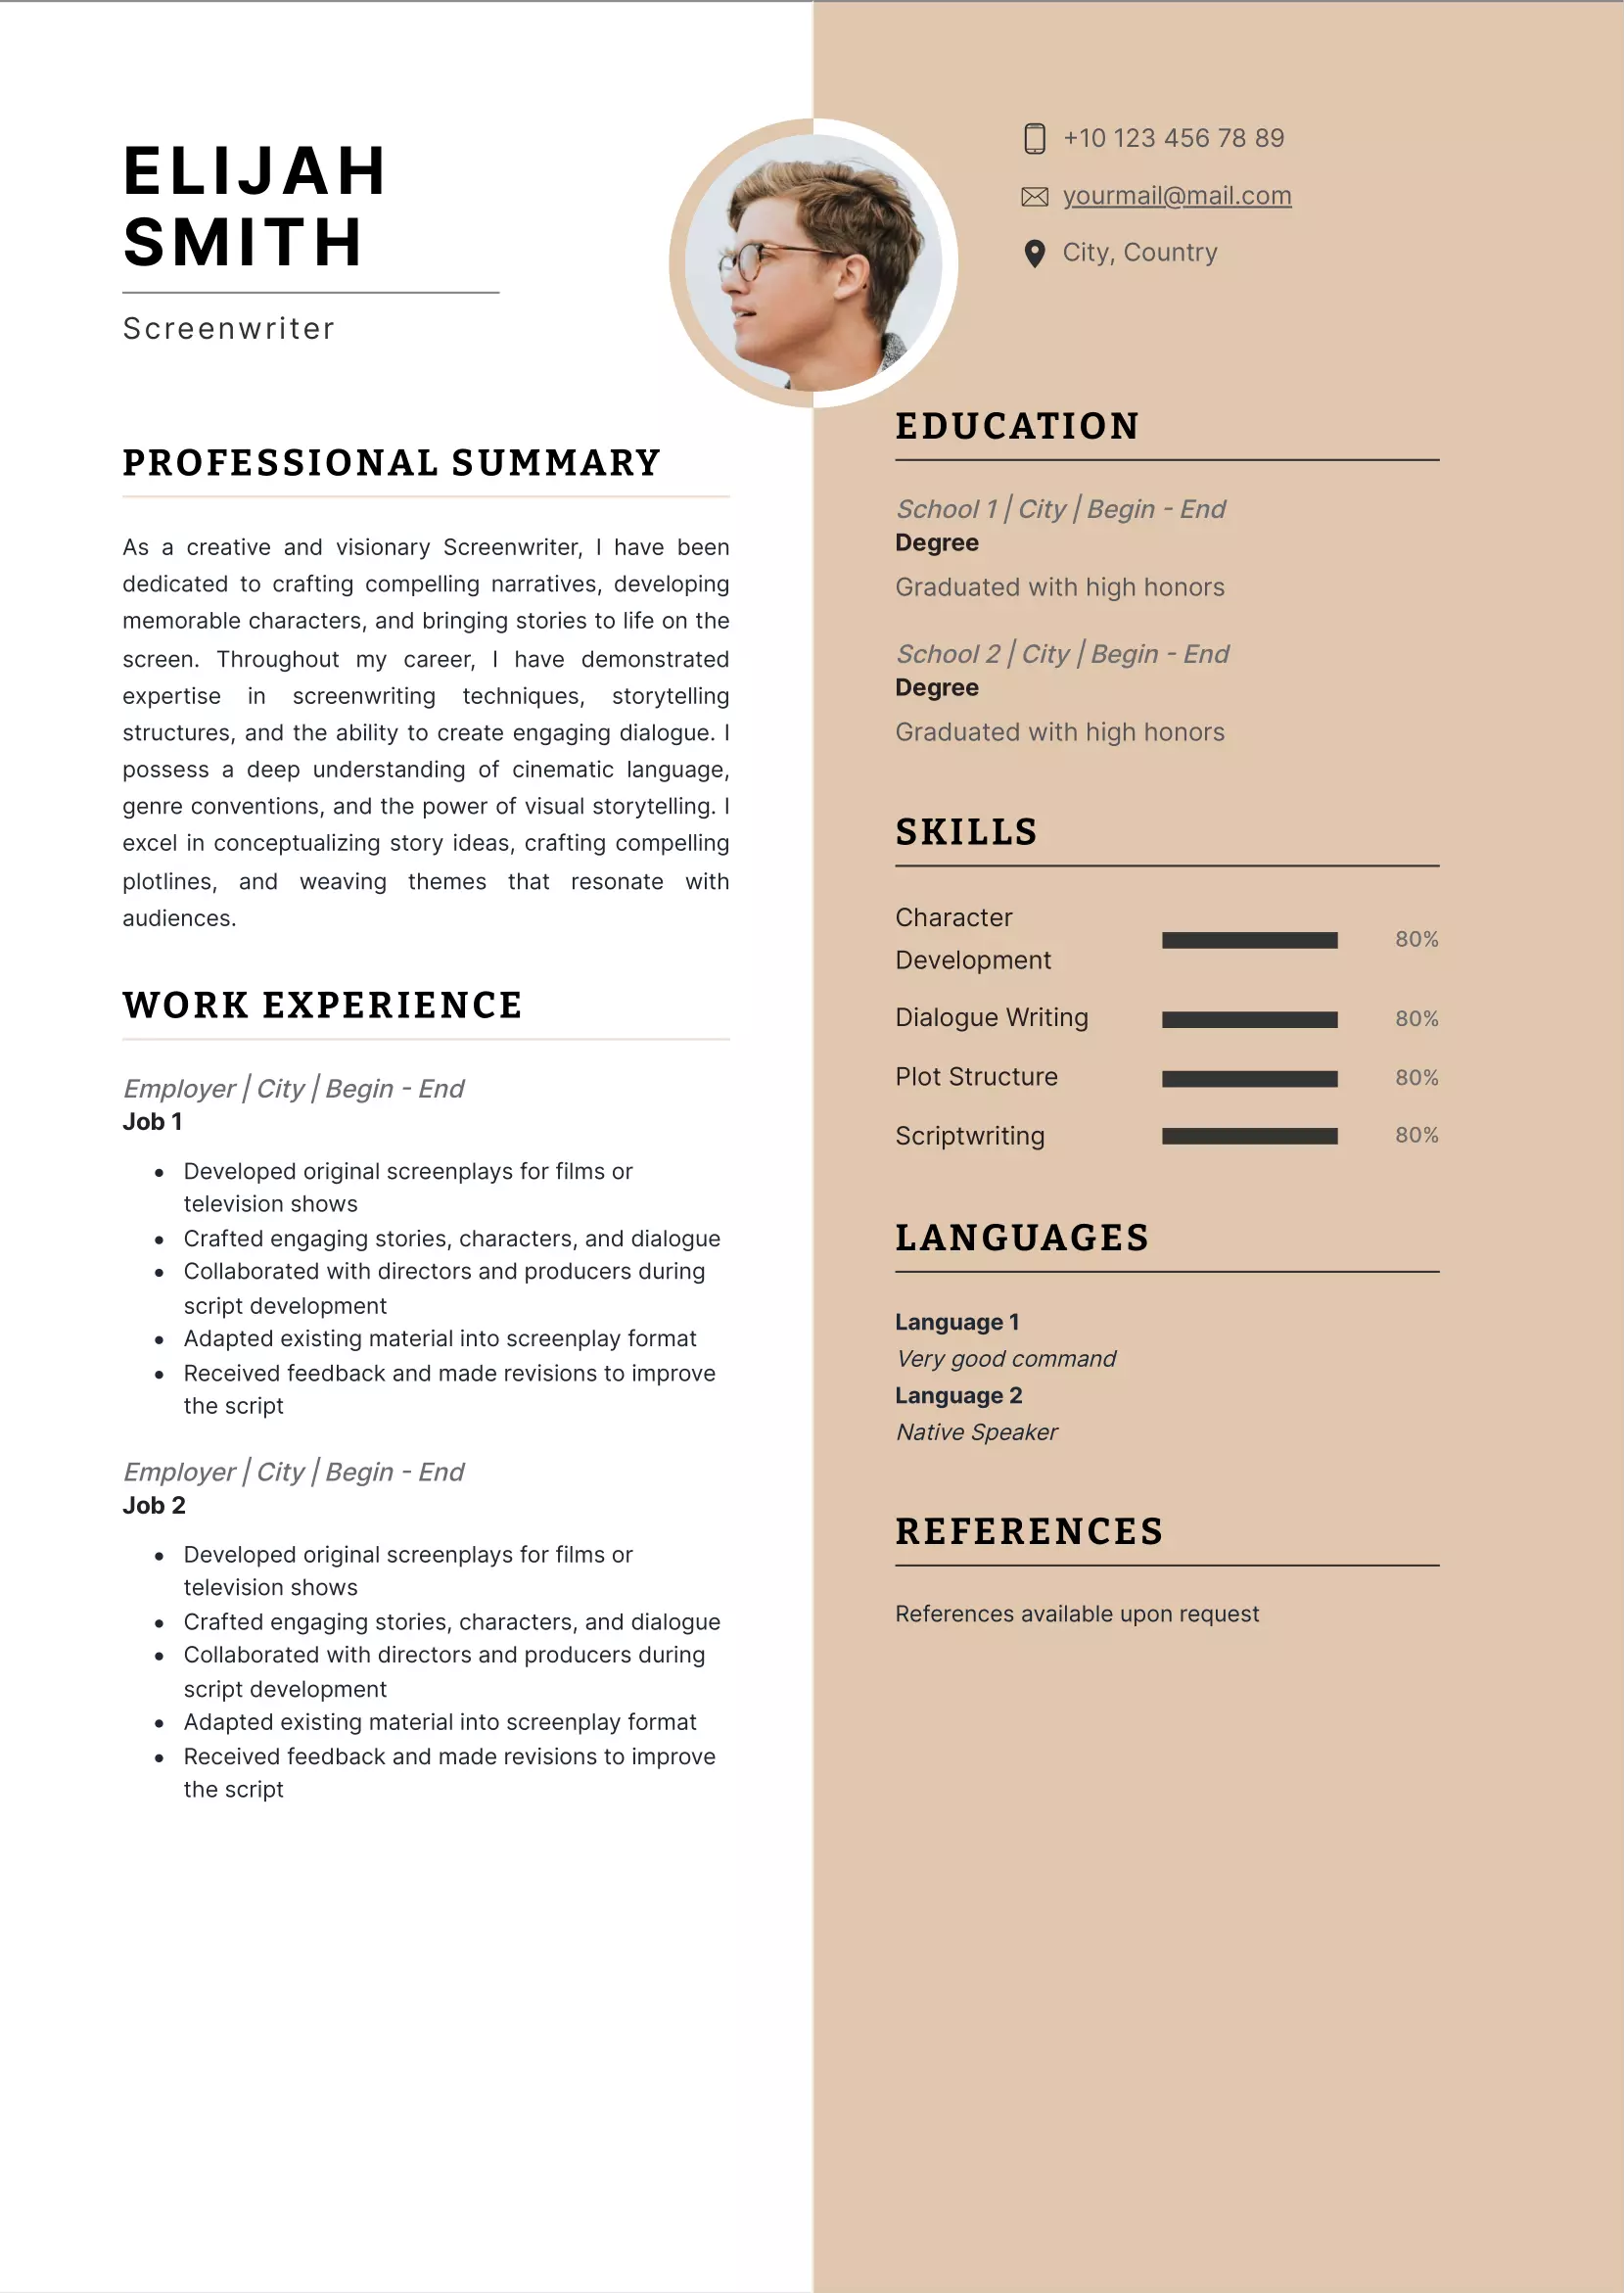 Screenwriter resume examples CV